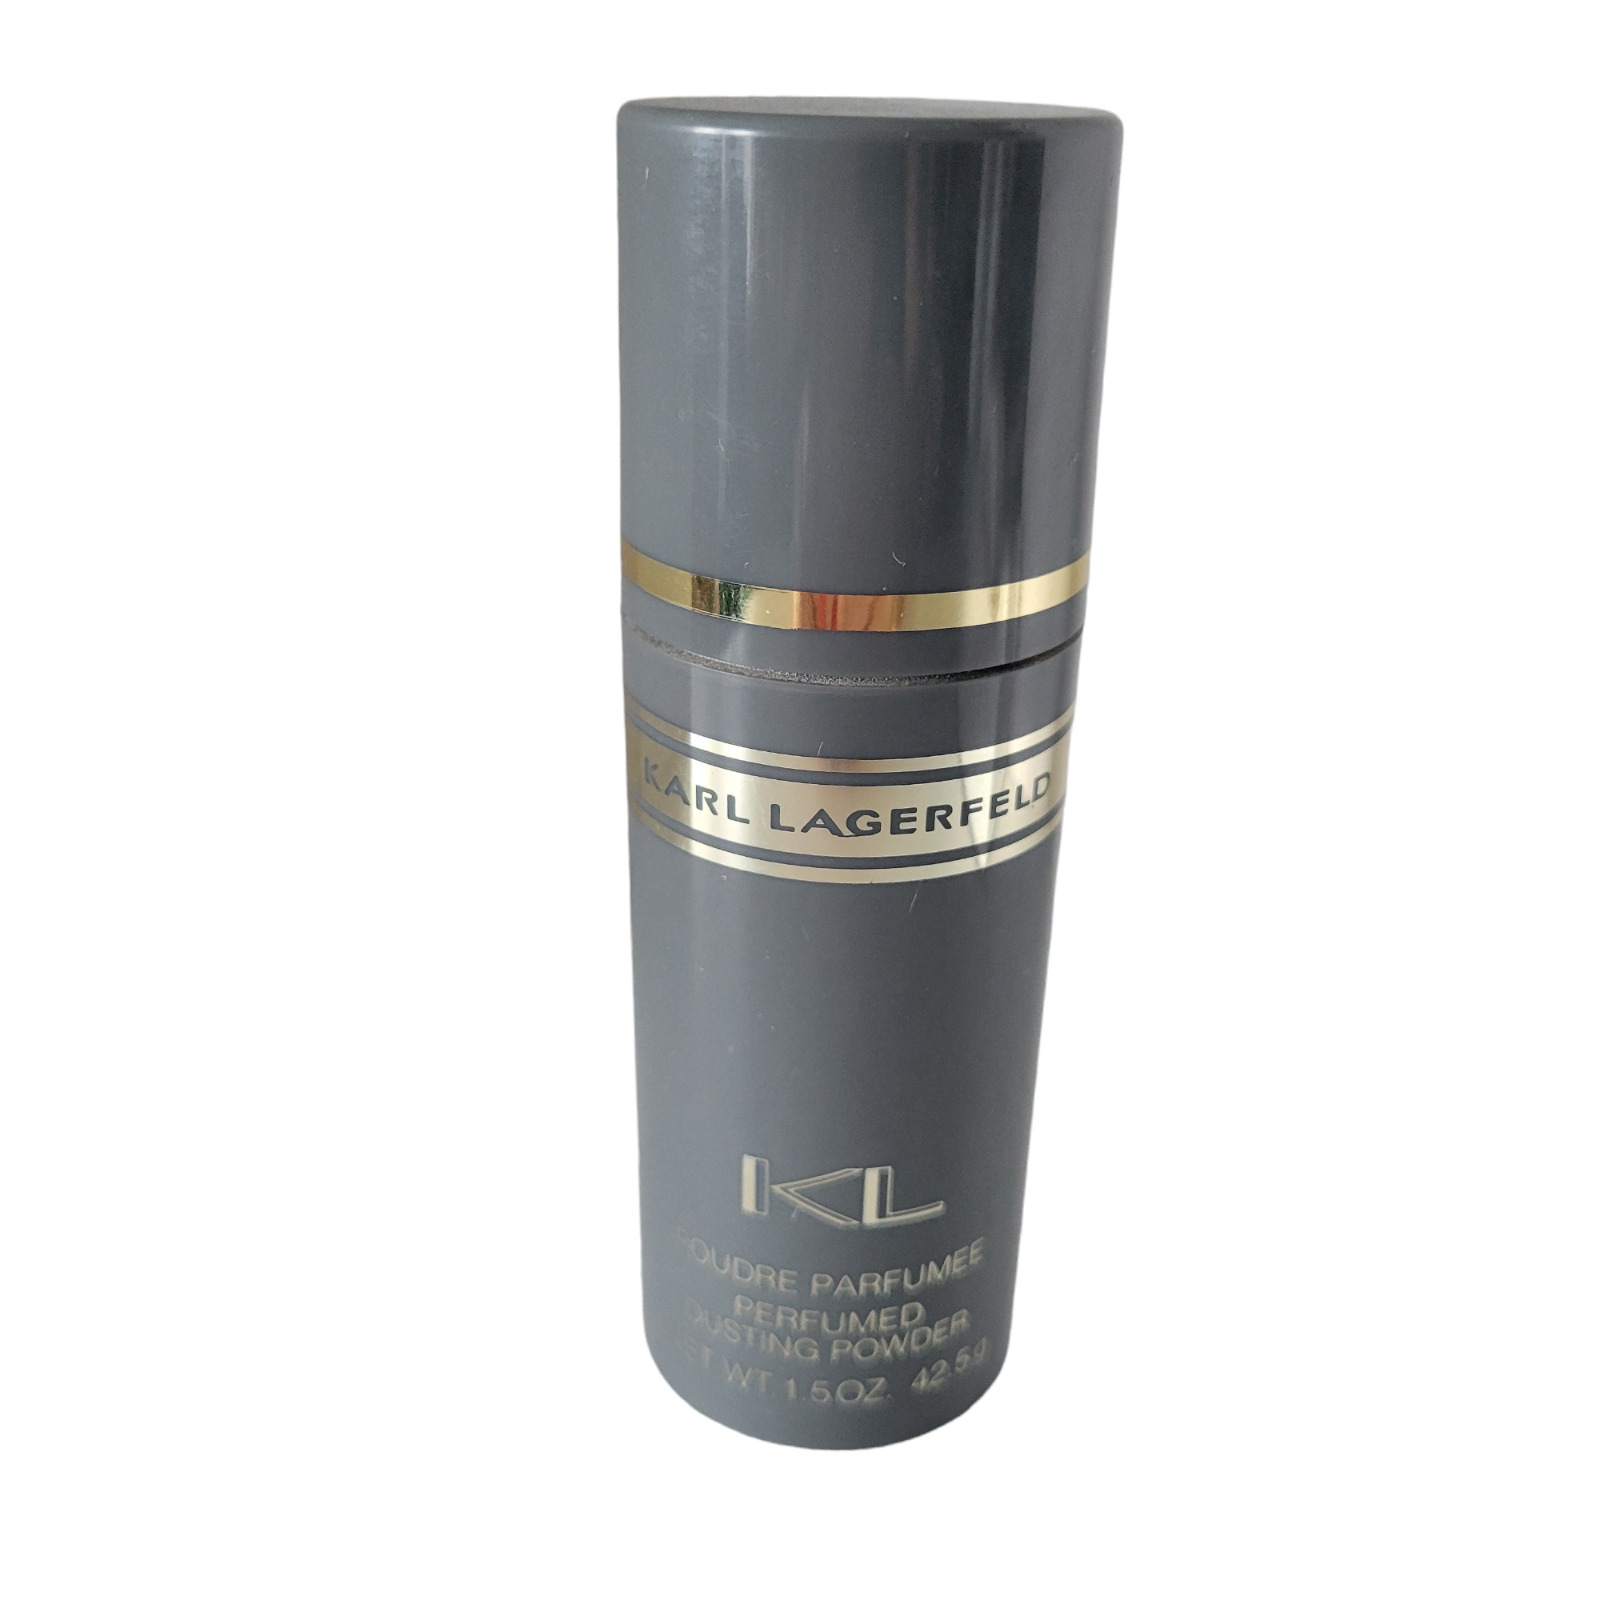 KL Karl Lagerfeld Perfumed Dusting Powder 1.5 oz/ 42.5g Made in USA